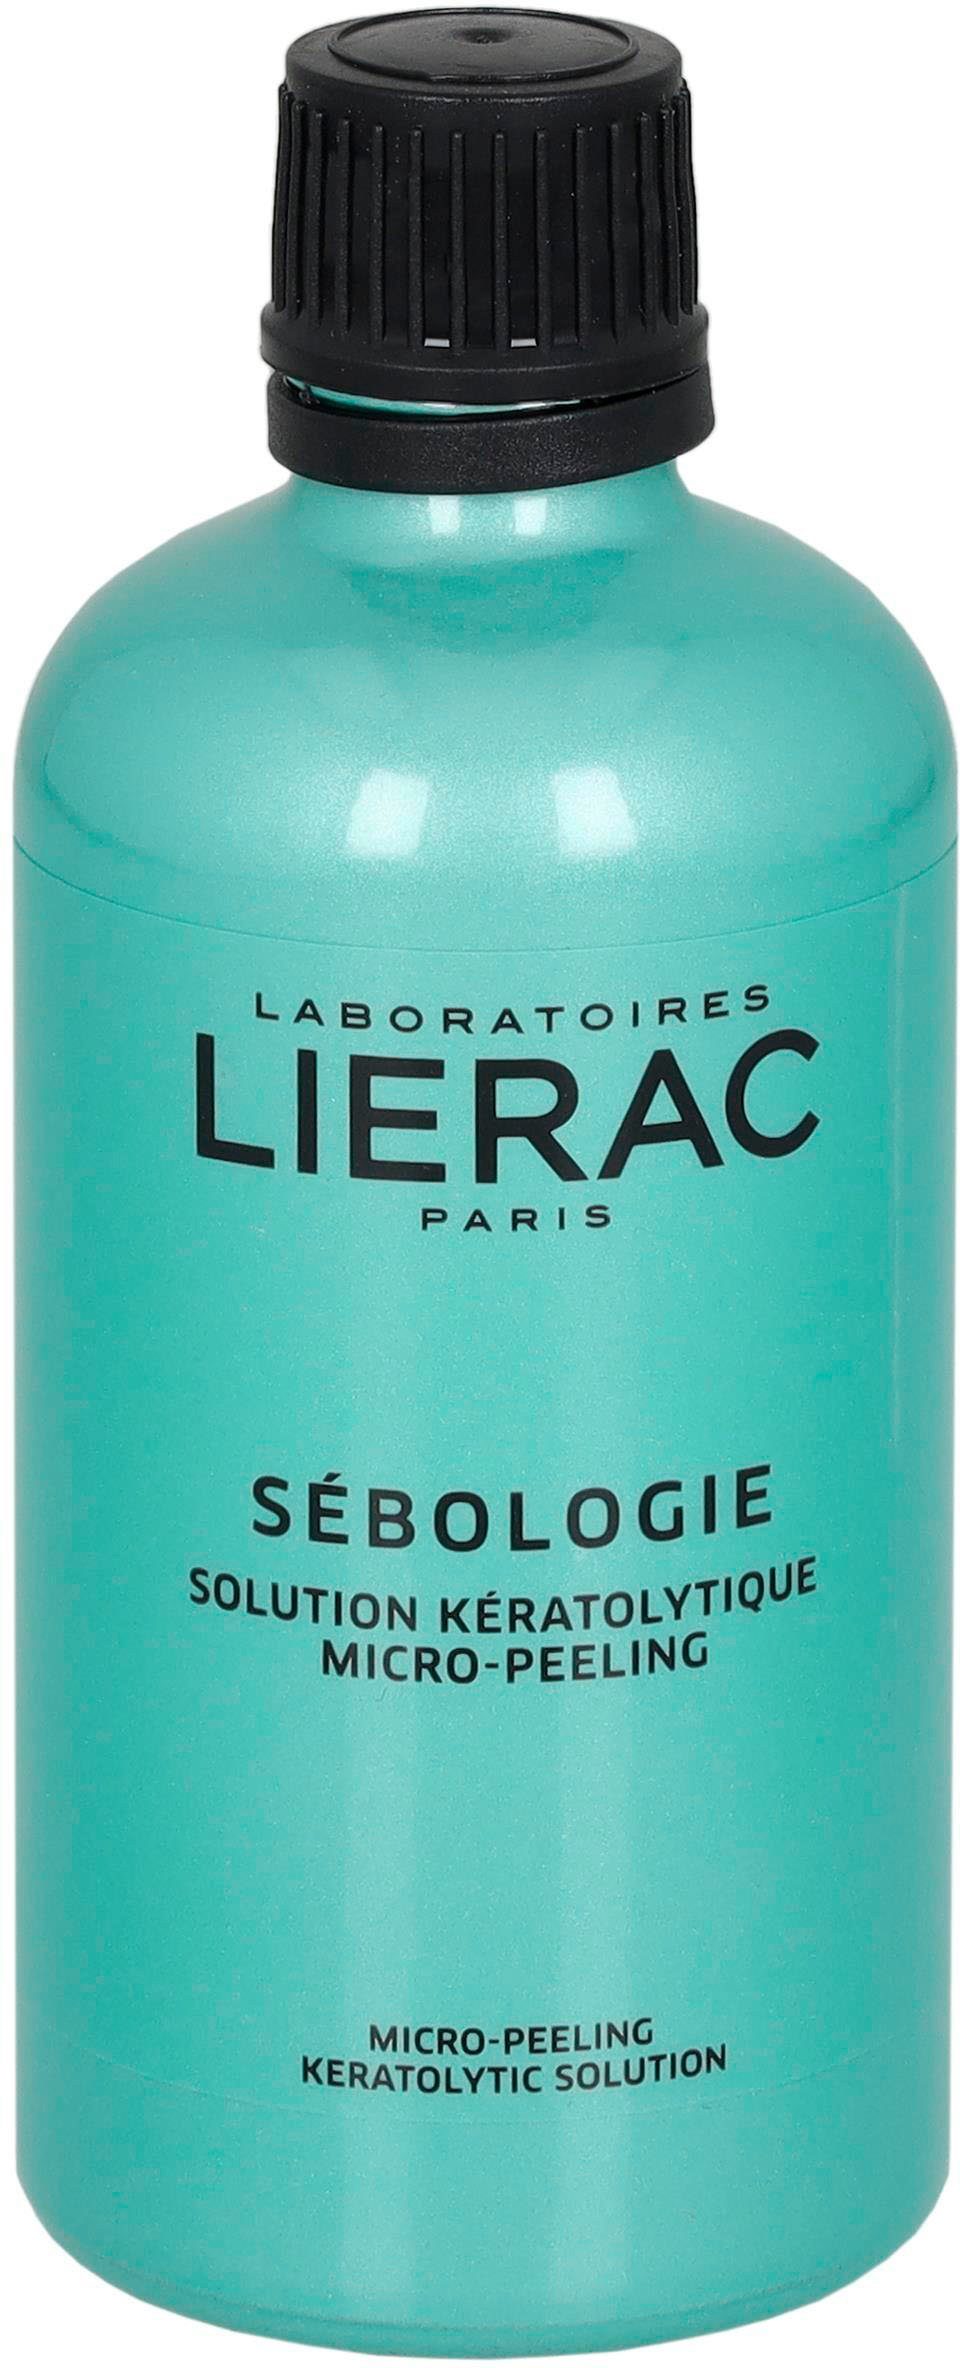 LIERAC Gesichts-Reinigungsfluid Sebologie Keratolytique Micro-Peeling Solution